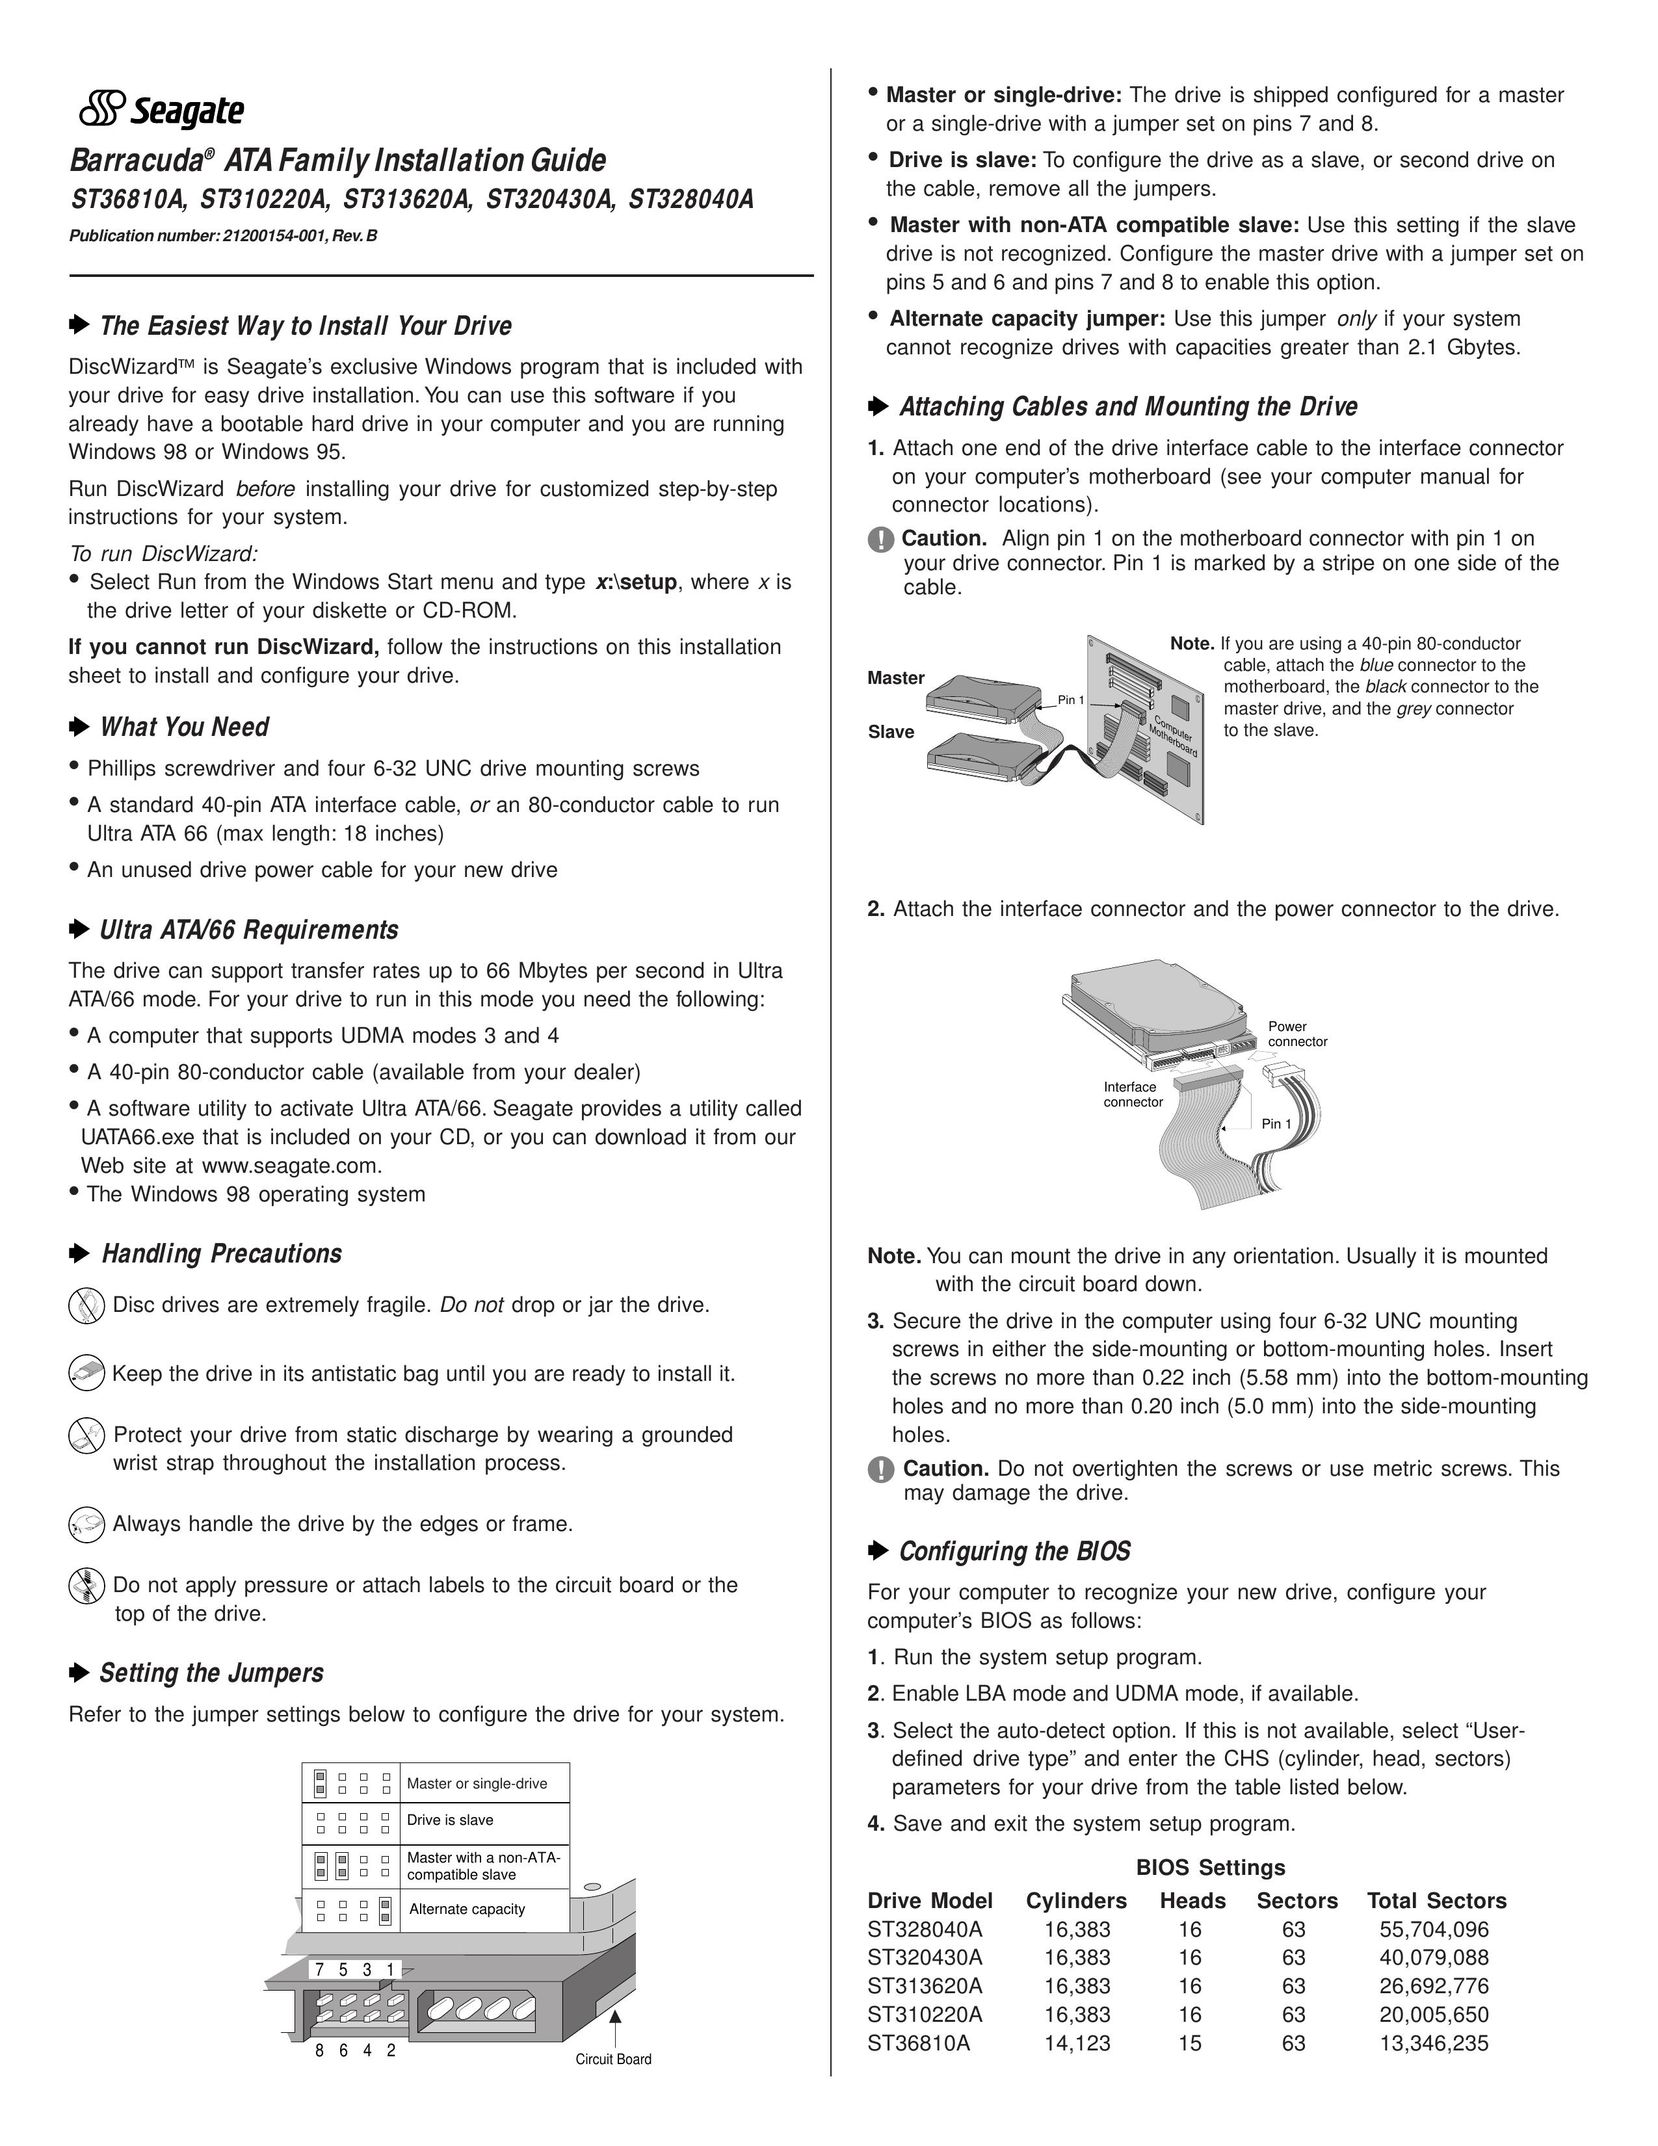 Barracuda Networks ST36810A Computer Drive User Manual